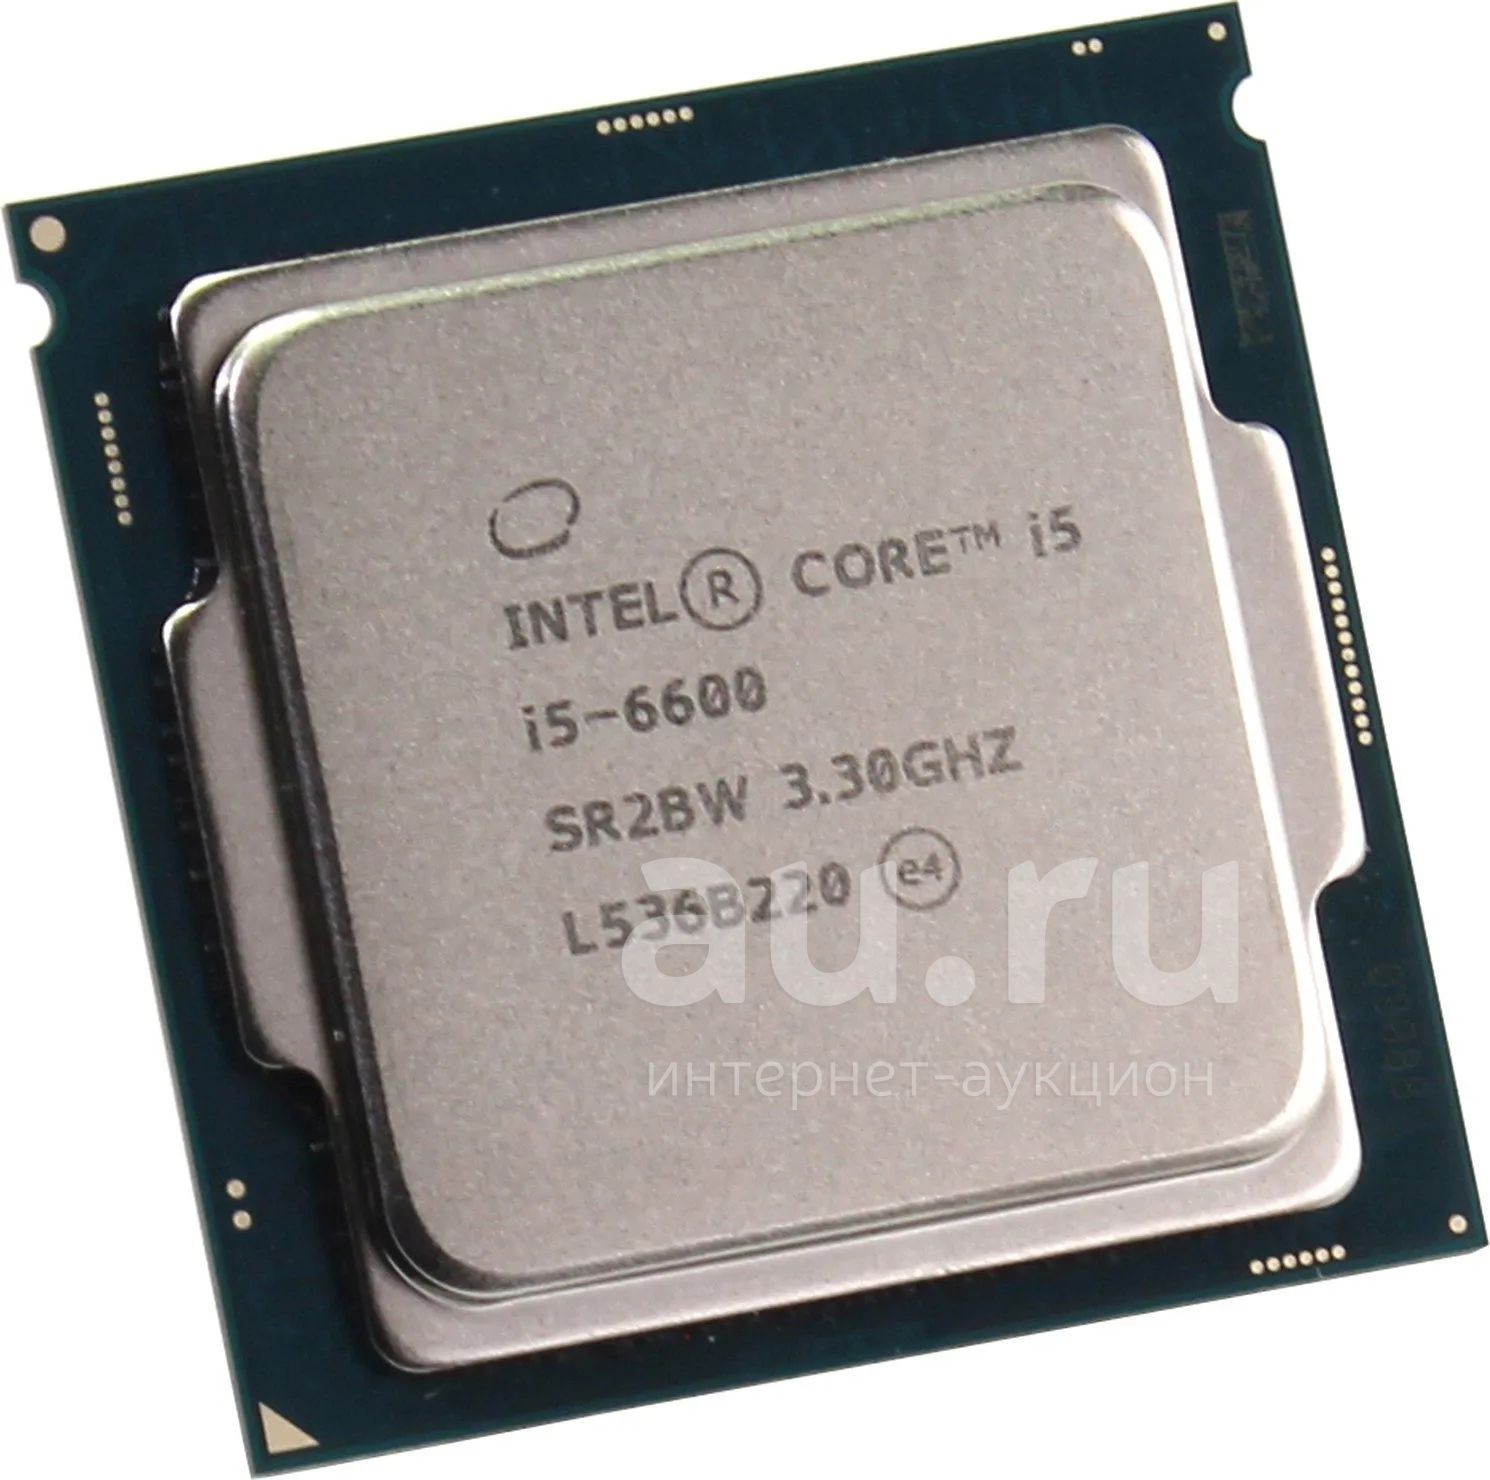 4 3.3 ггц. Intel Core i5 6600. Intel Core i5-6600 3.3GHZ. Intel Core i5-6600 Skylake. Процессор CPU Intel Core i5.